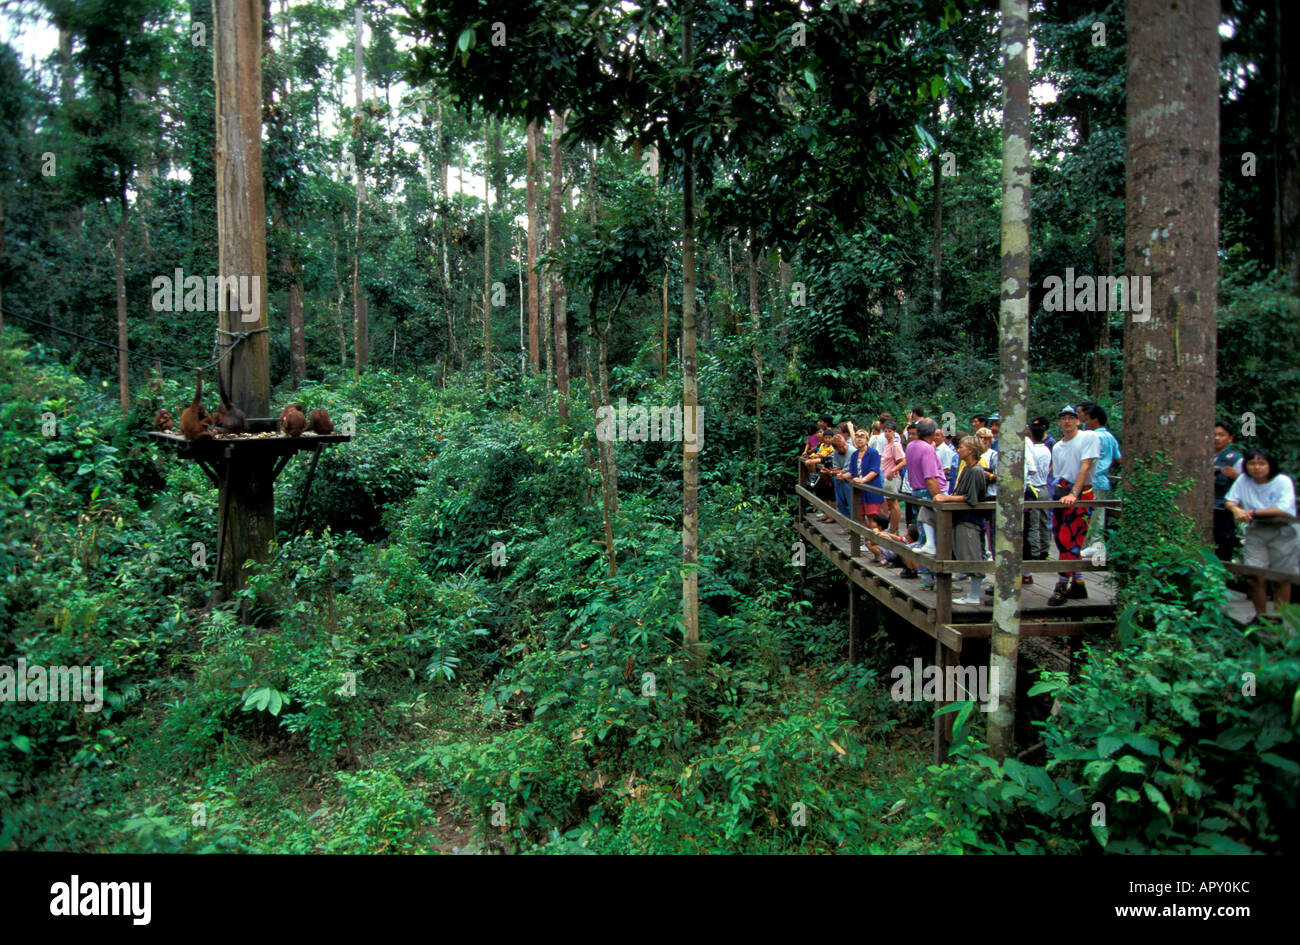 Orangutan rehabilitation center, Gunung Leuser National Park, Sumatra, Indonesia, Asia Stock Photo